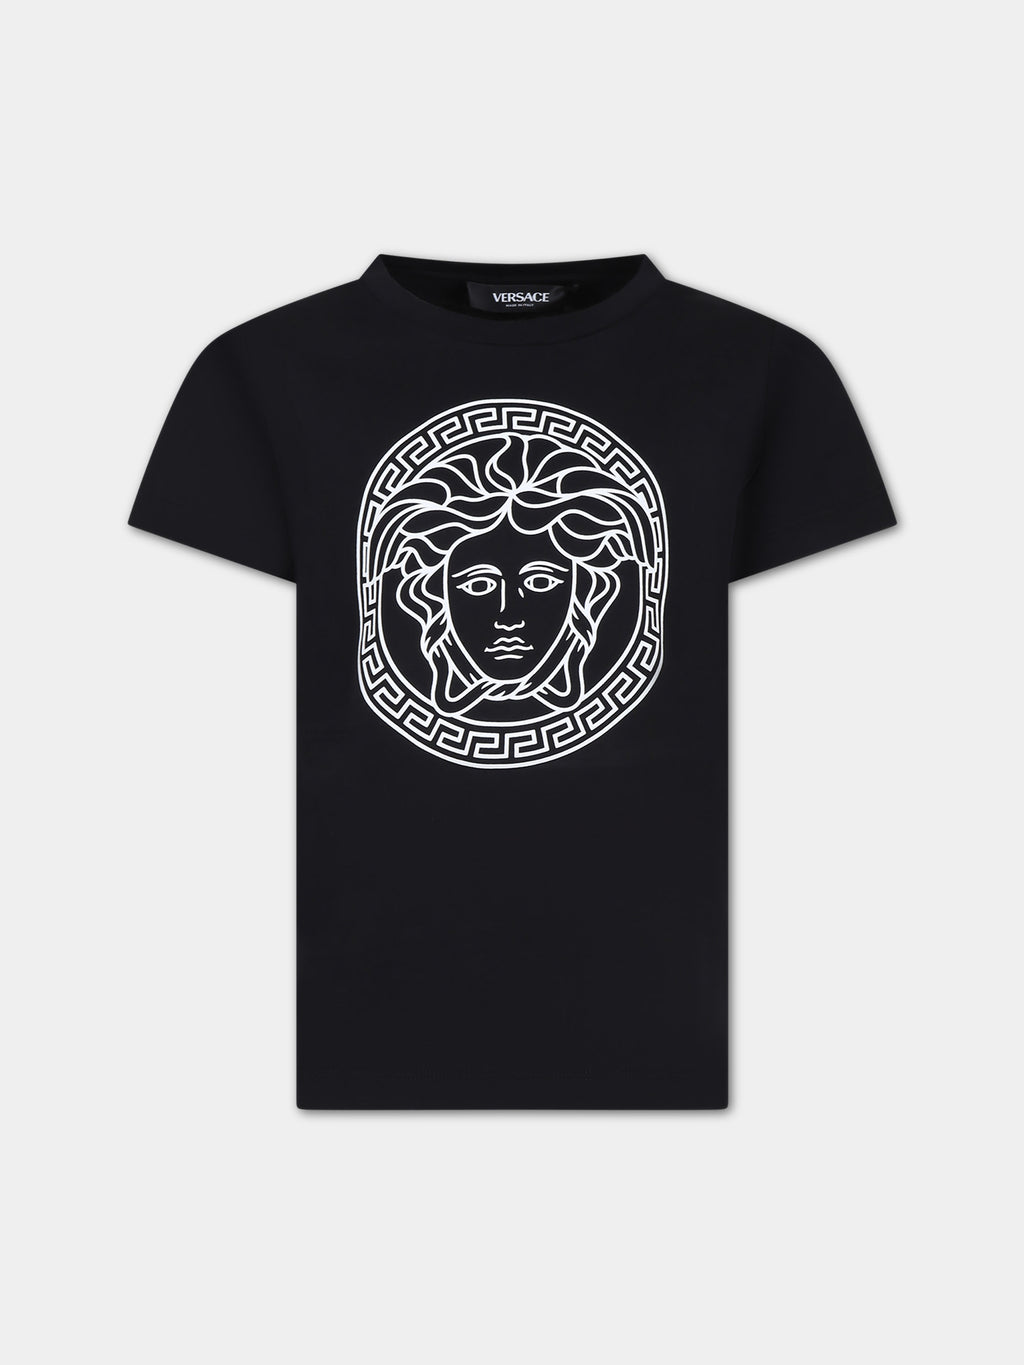 T-shirt nera per bambini con Medusa